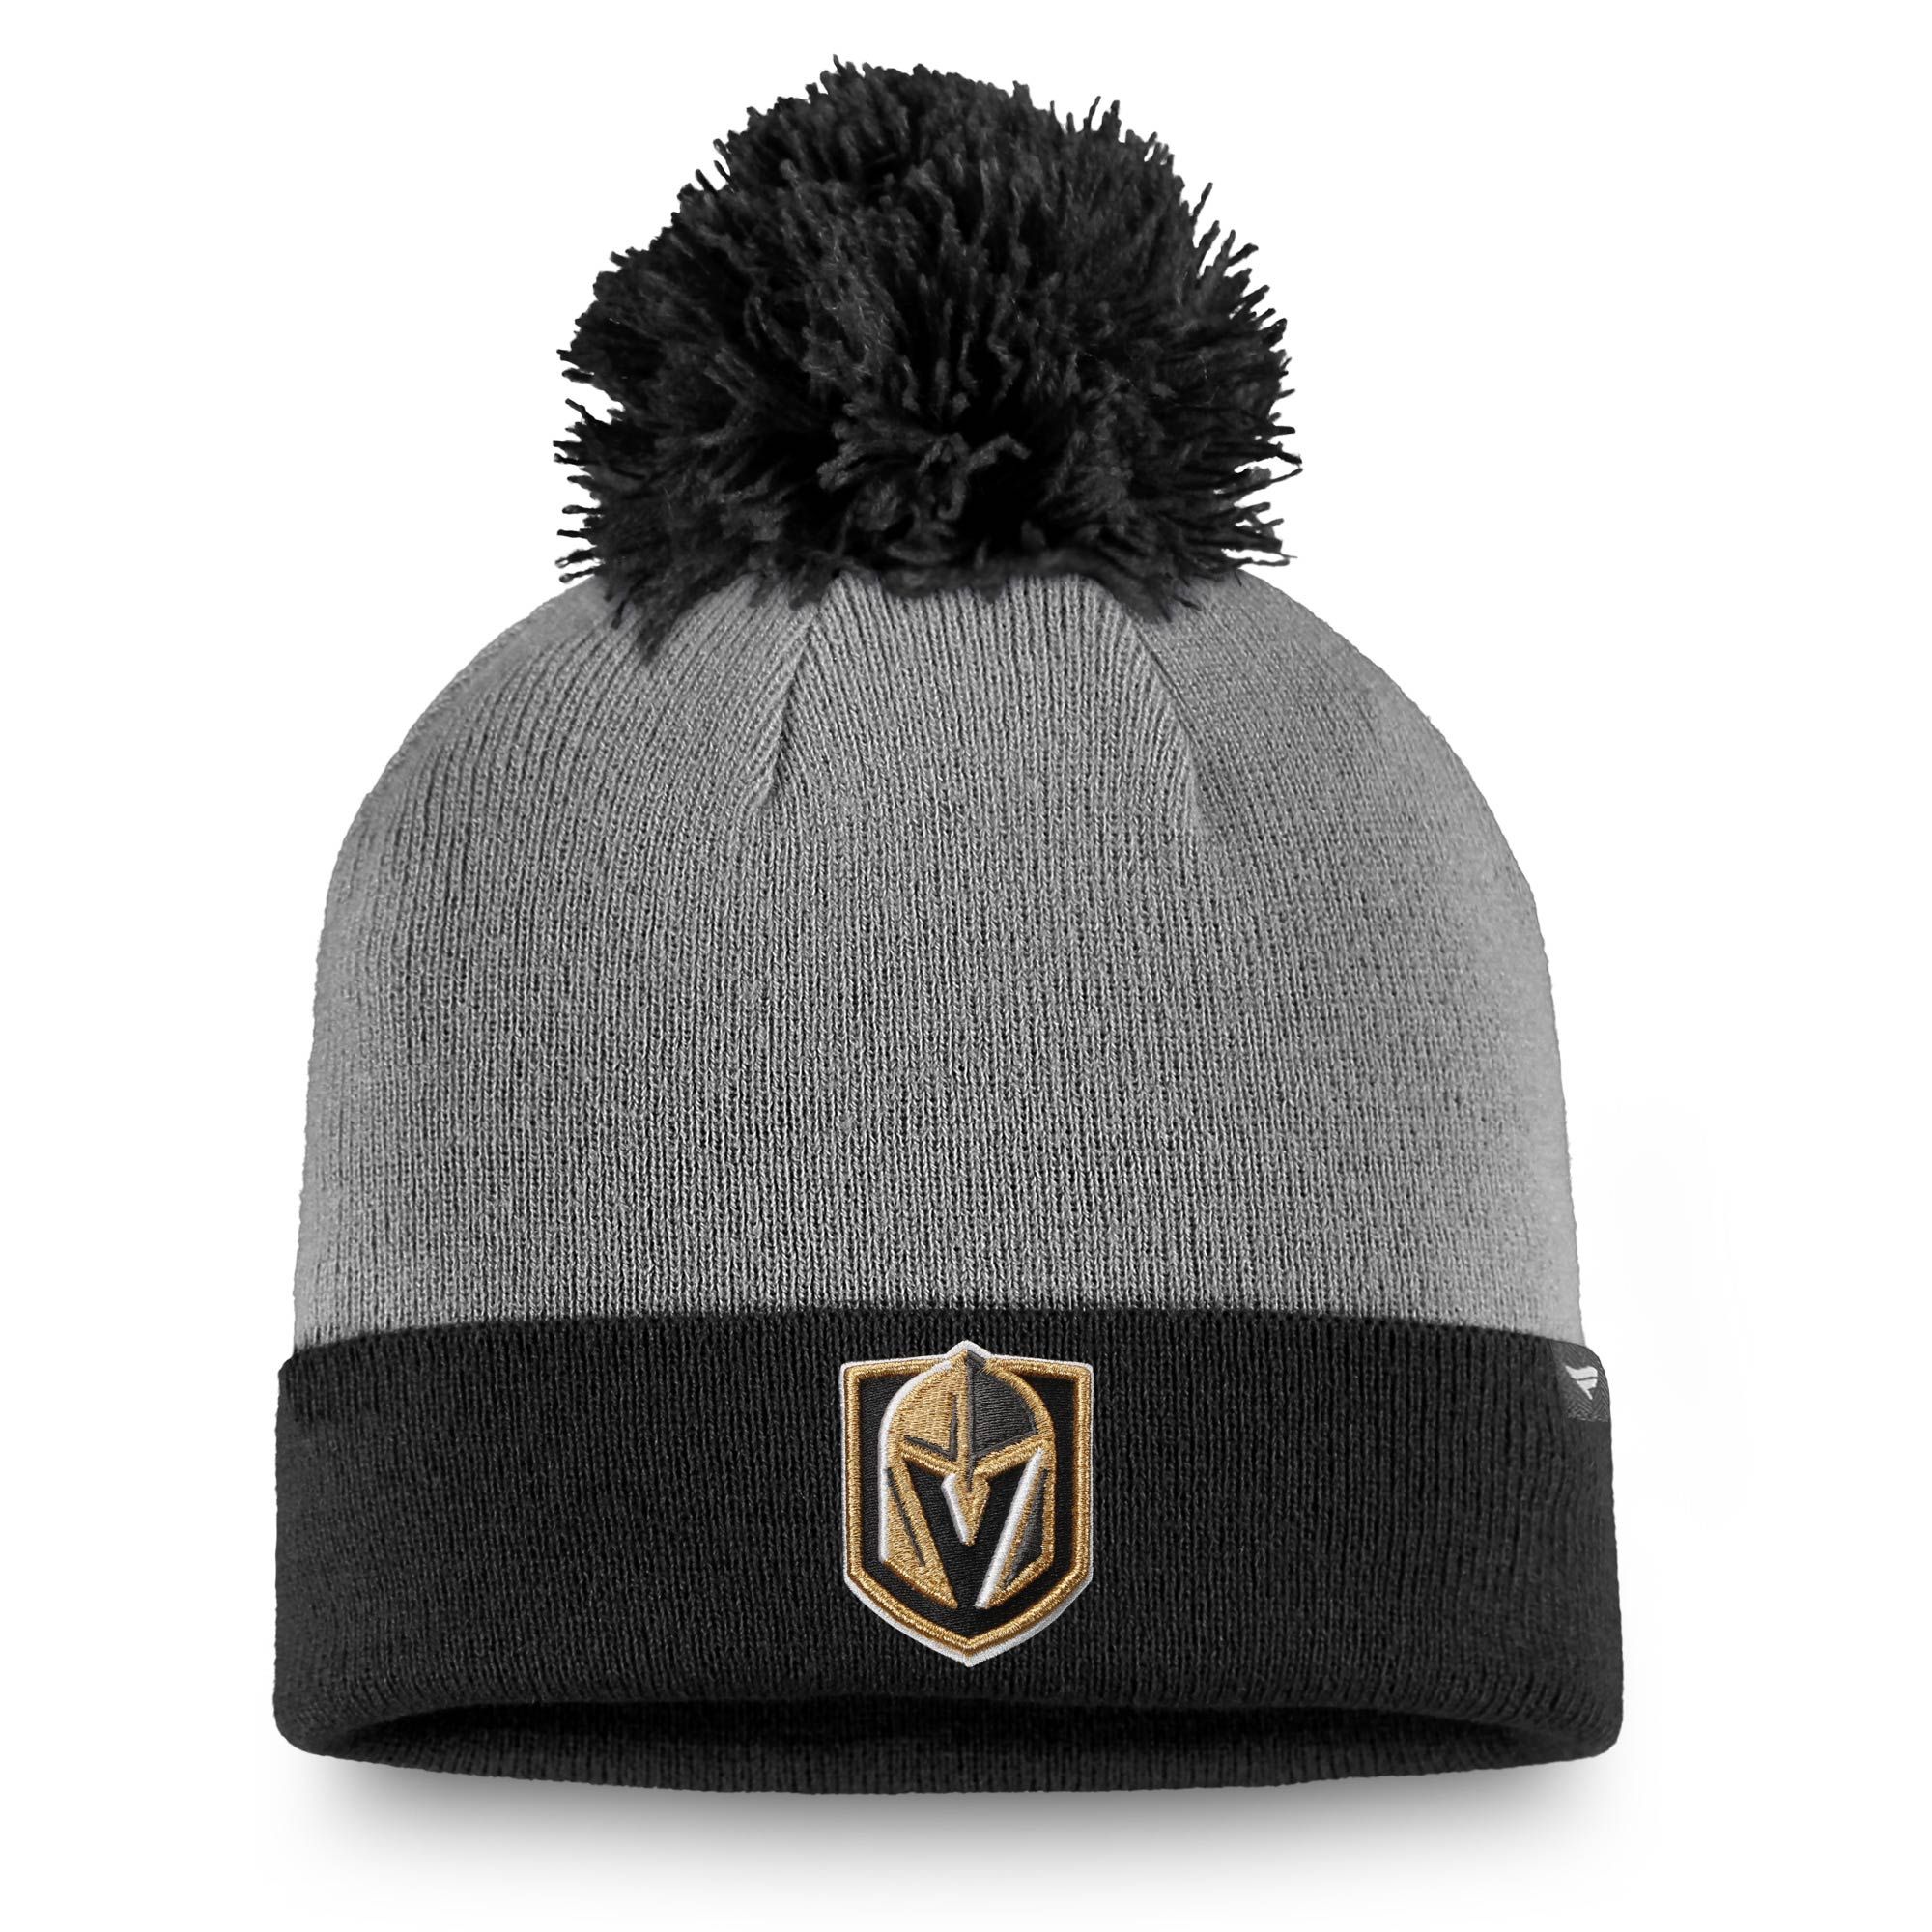 Men's Vegas Golden Knights Fanatics Branded Gray/Black Cuffed Knit Hat with Pom | NHL Shop